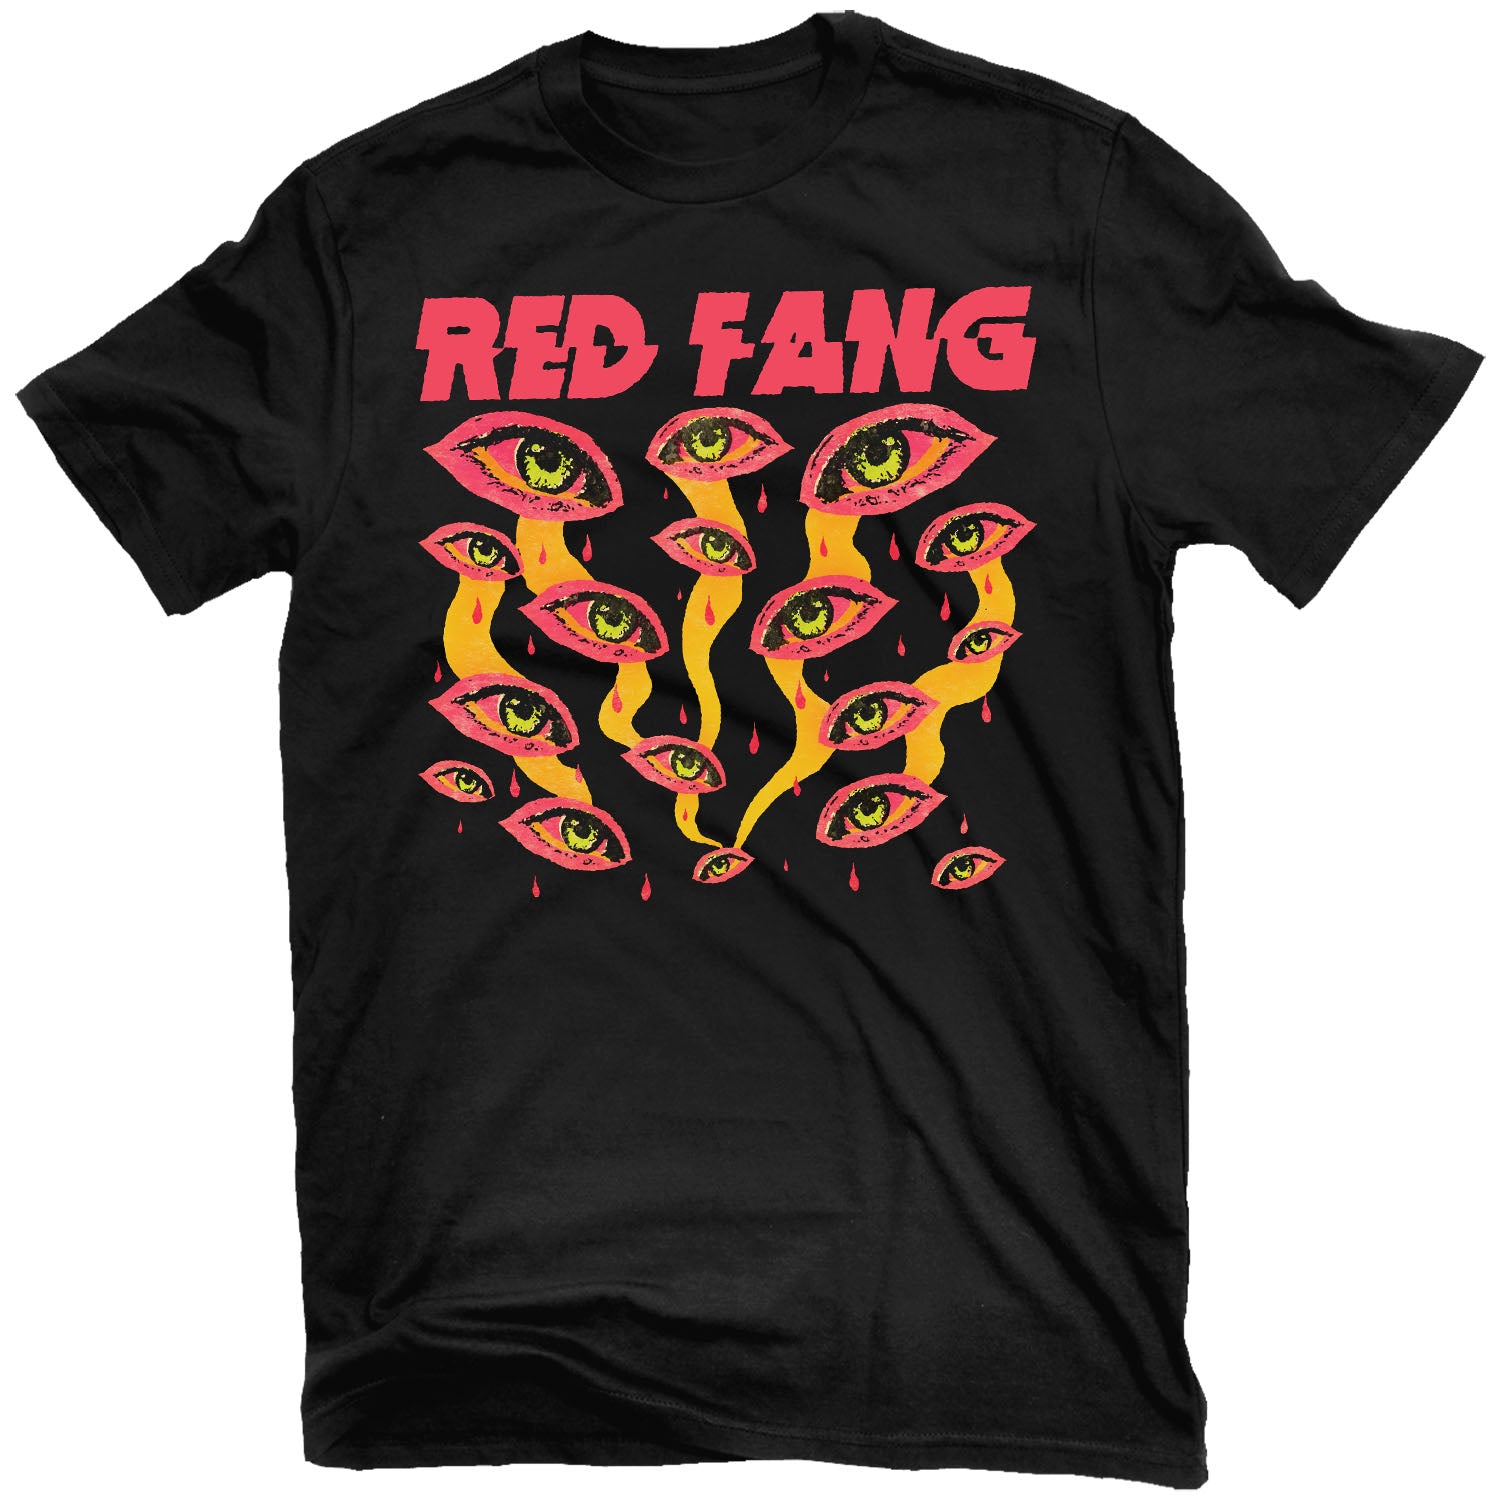 Red Fang "Arrows" T-Shirt